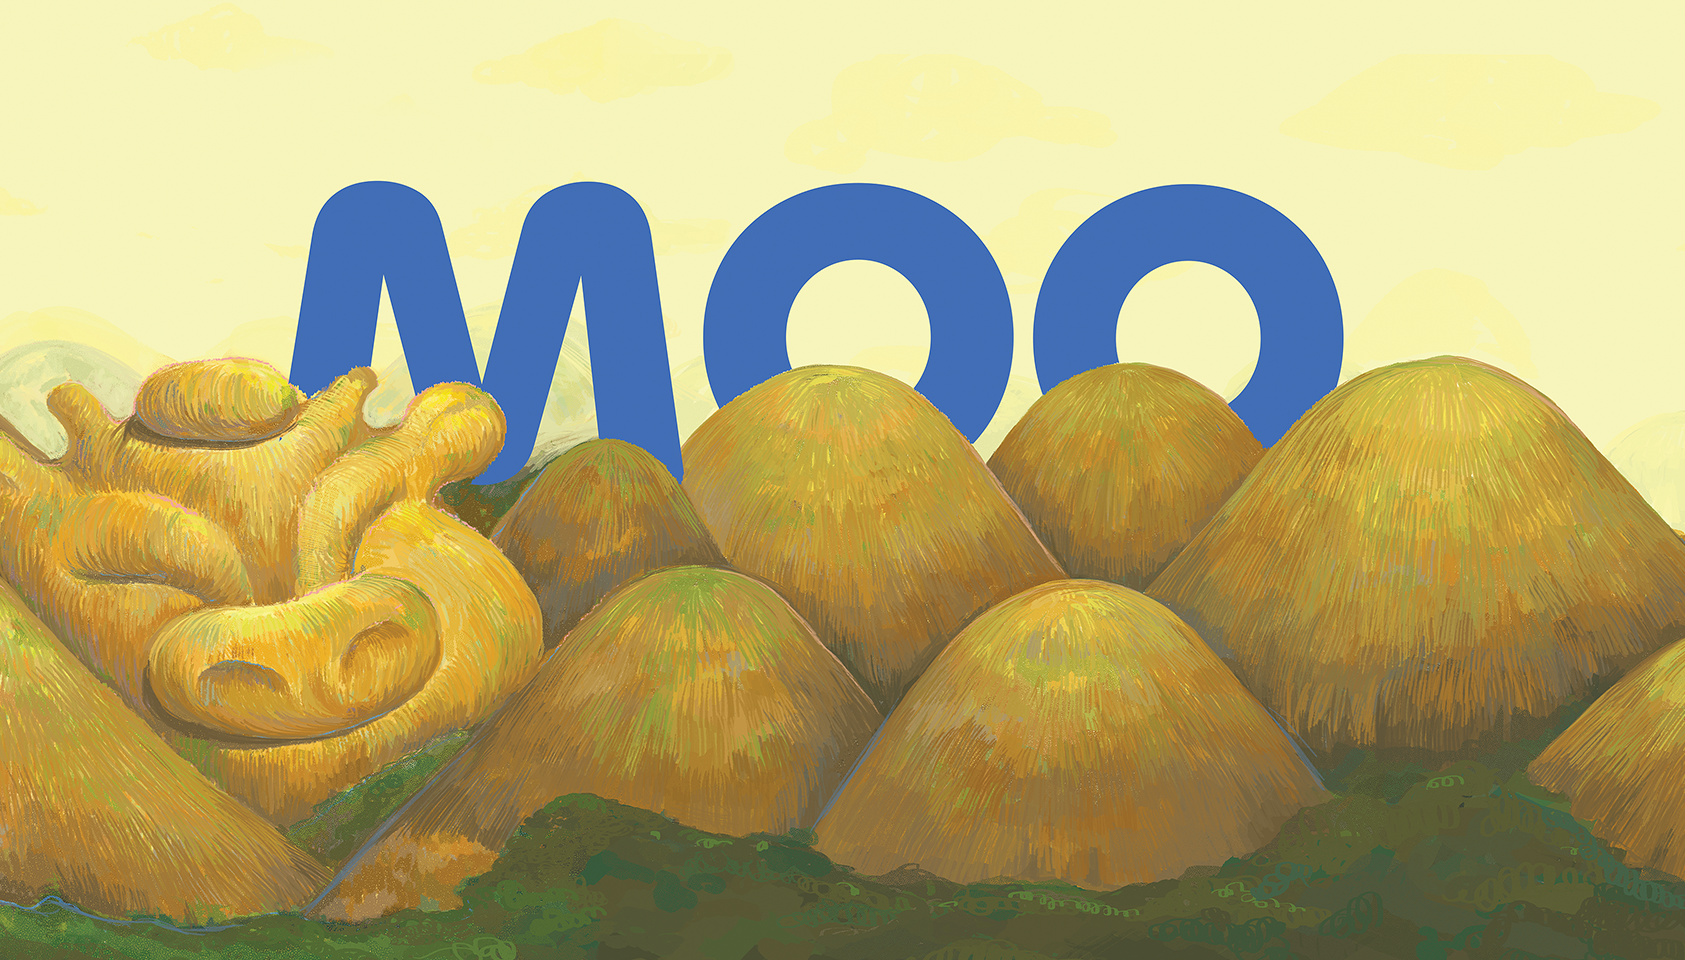 chocolate hills artwork with moo logotype